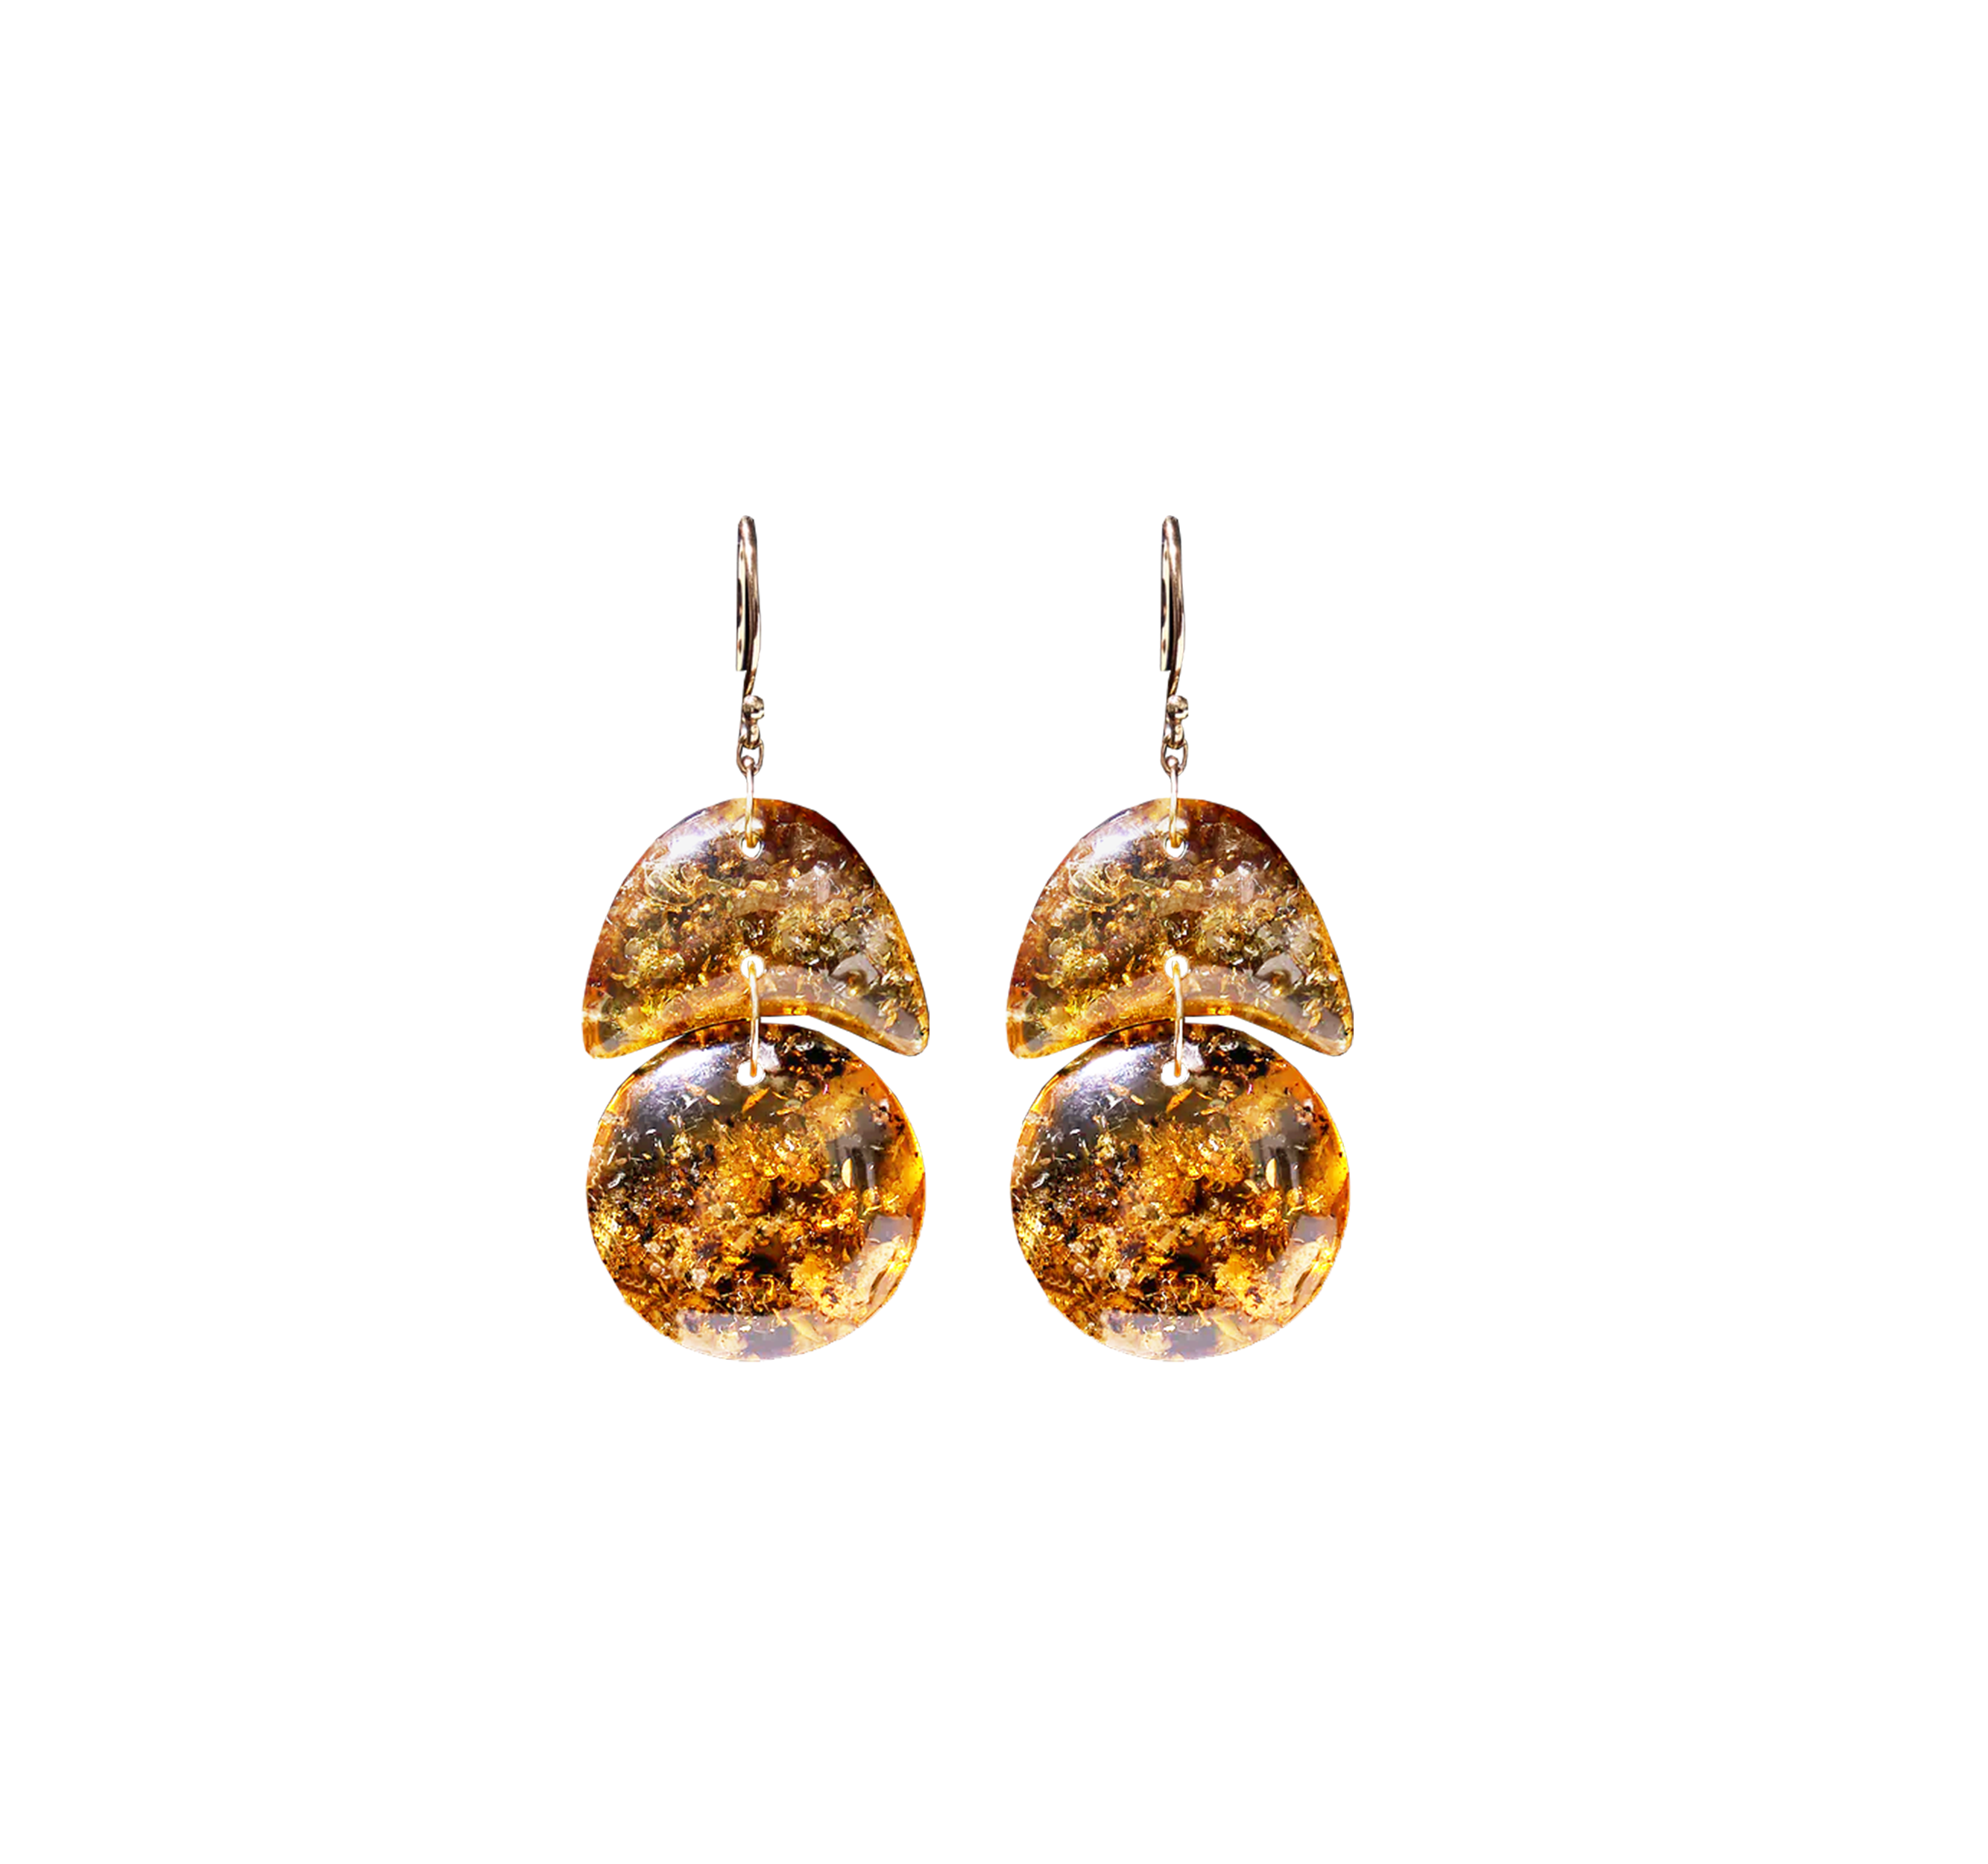 Tiny Arp Earrings in Amber